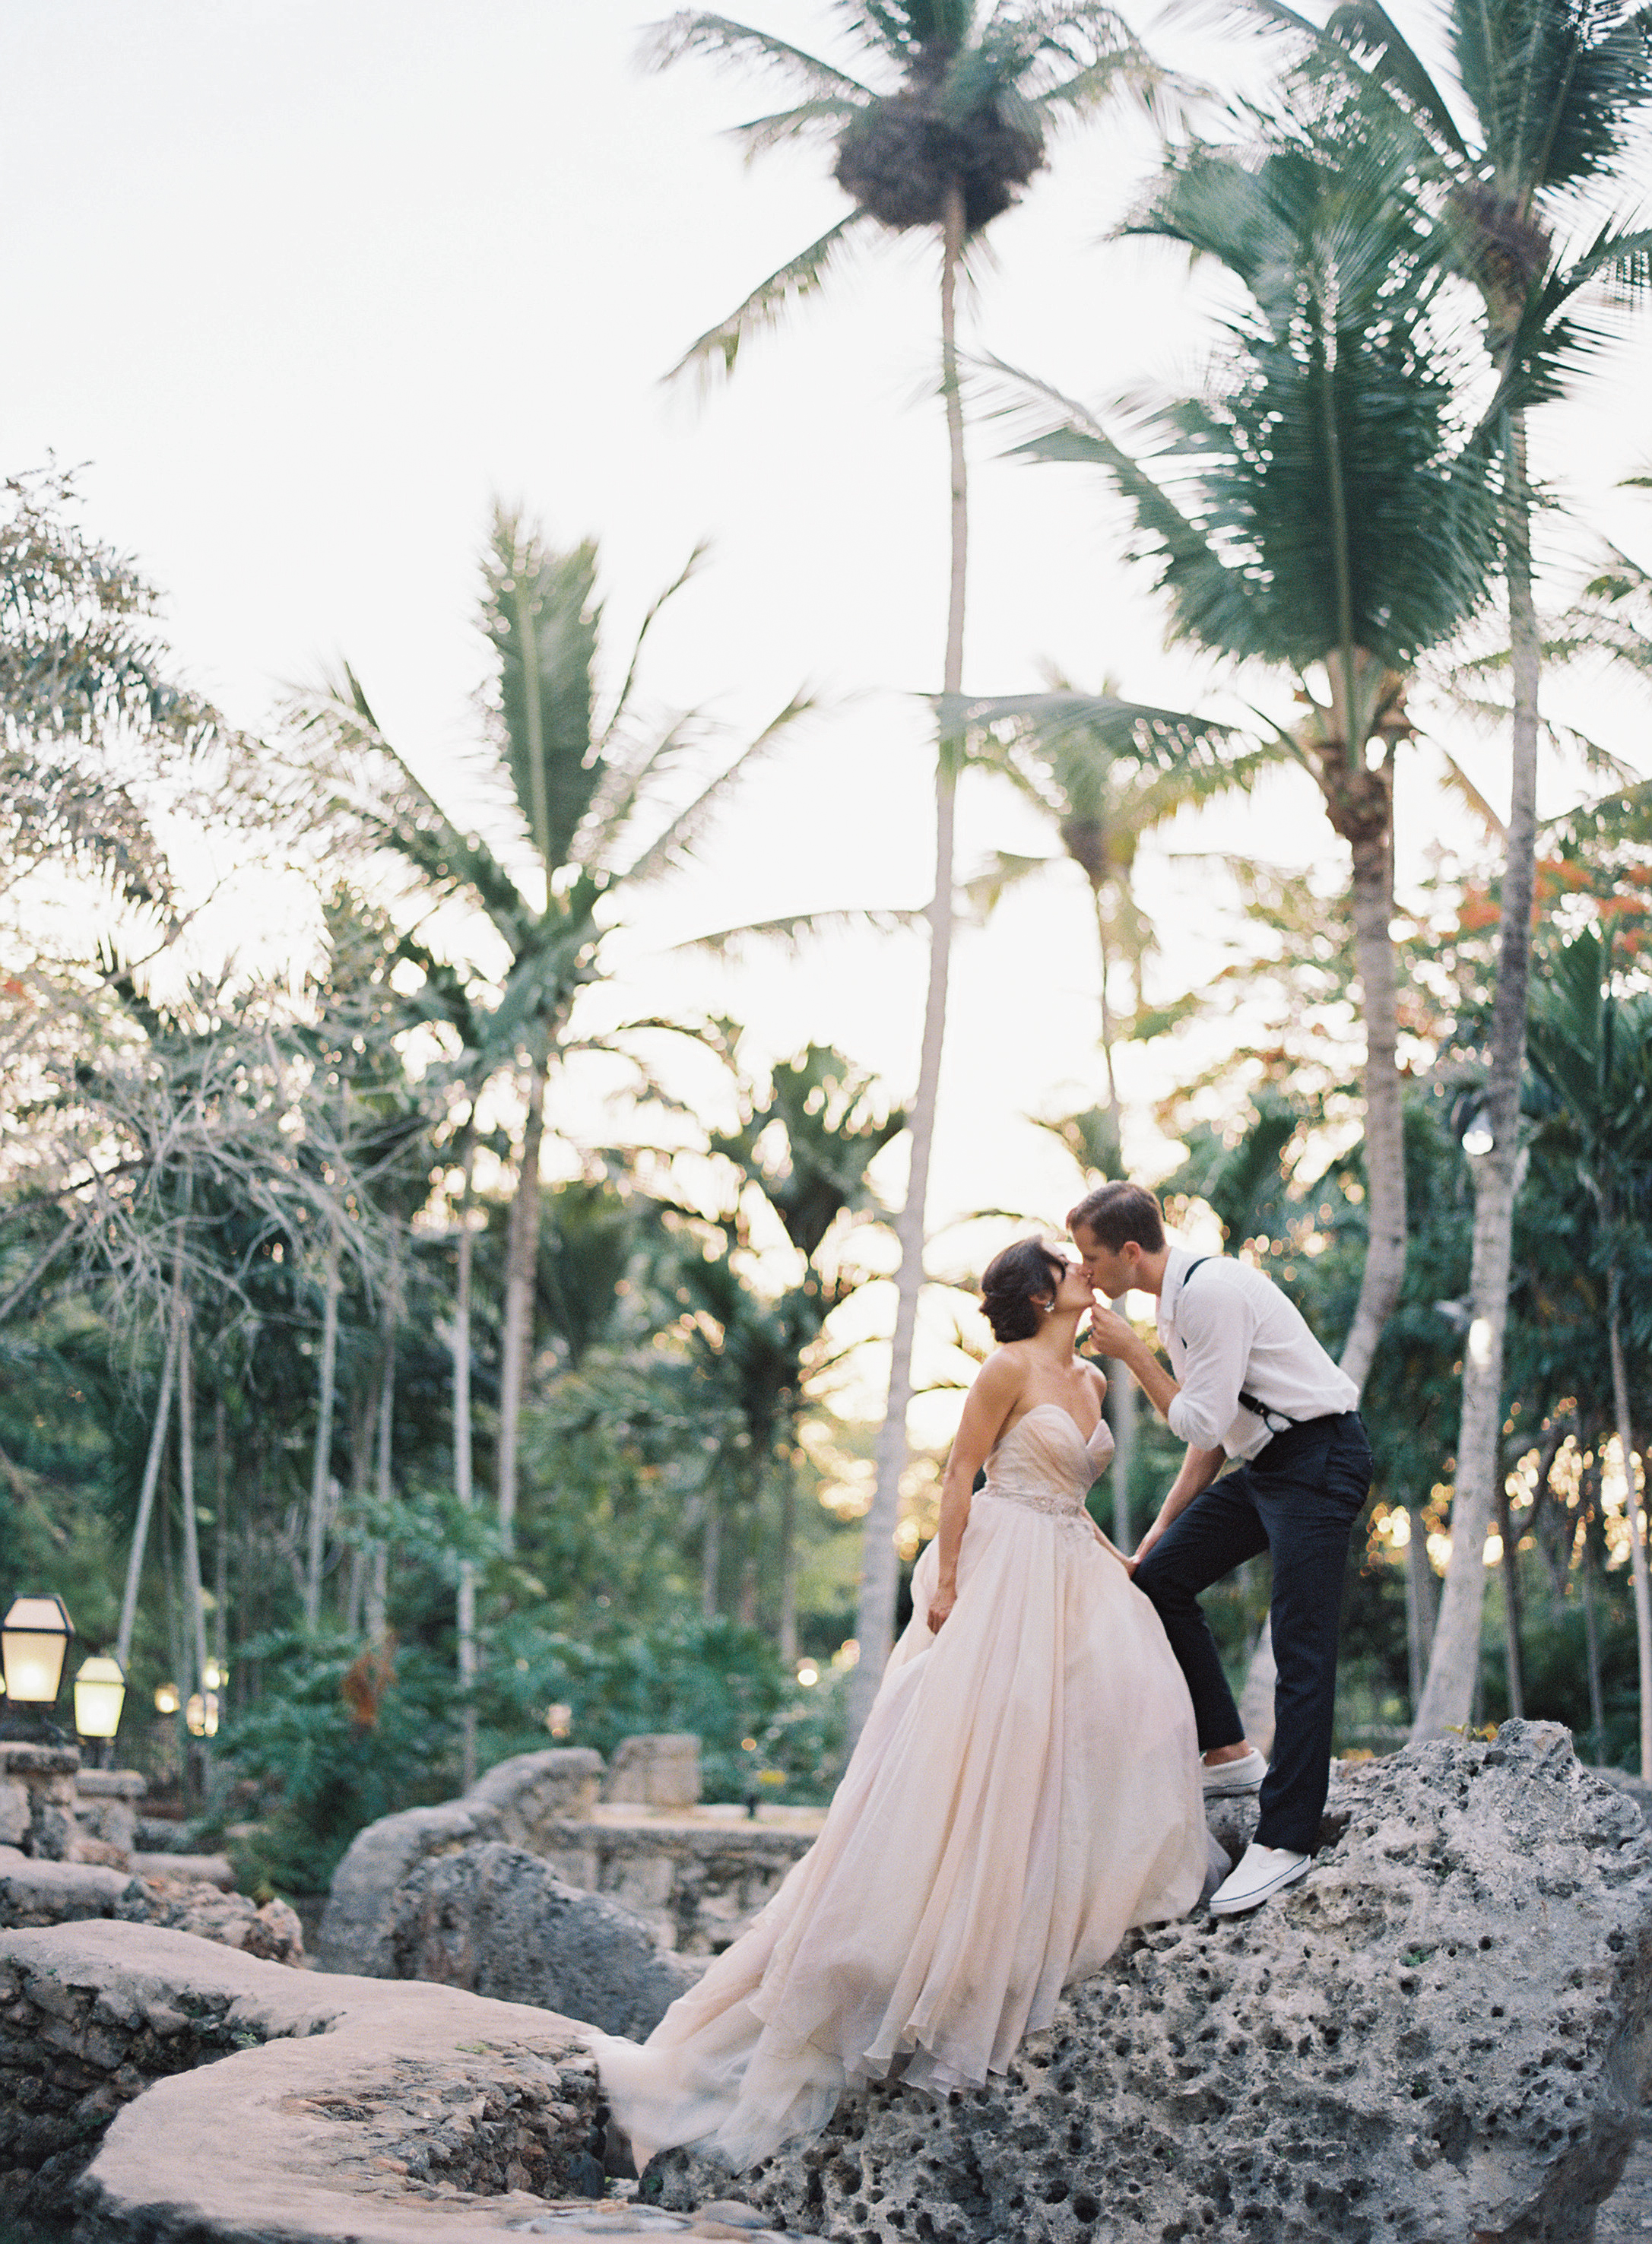 Dominican Republic Destination Wedding | Carrie King Photographer